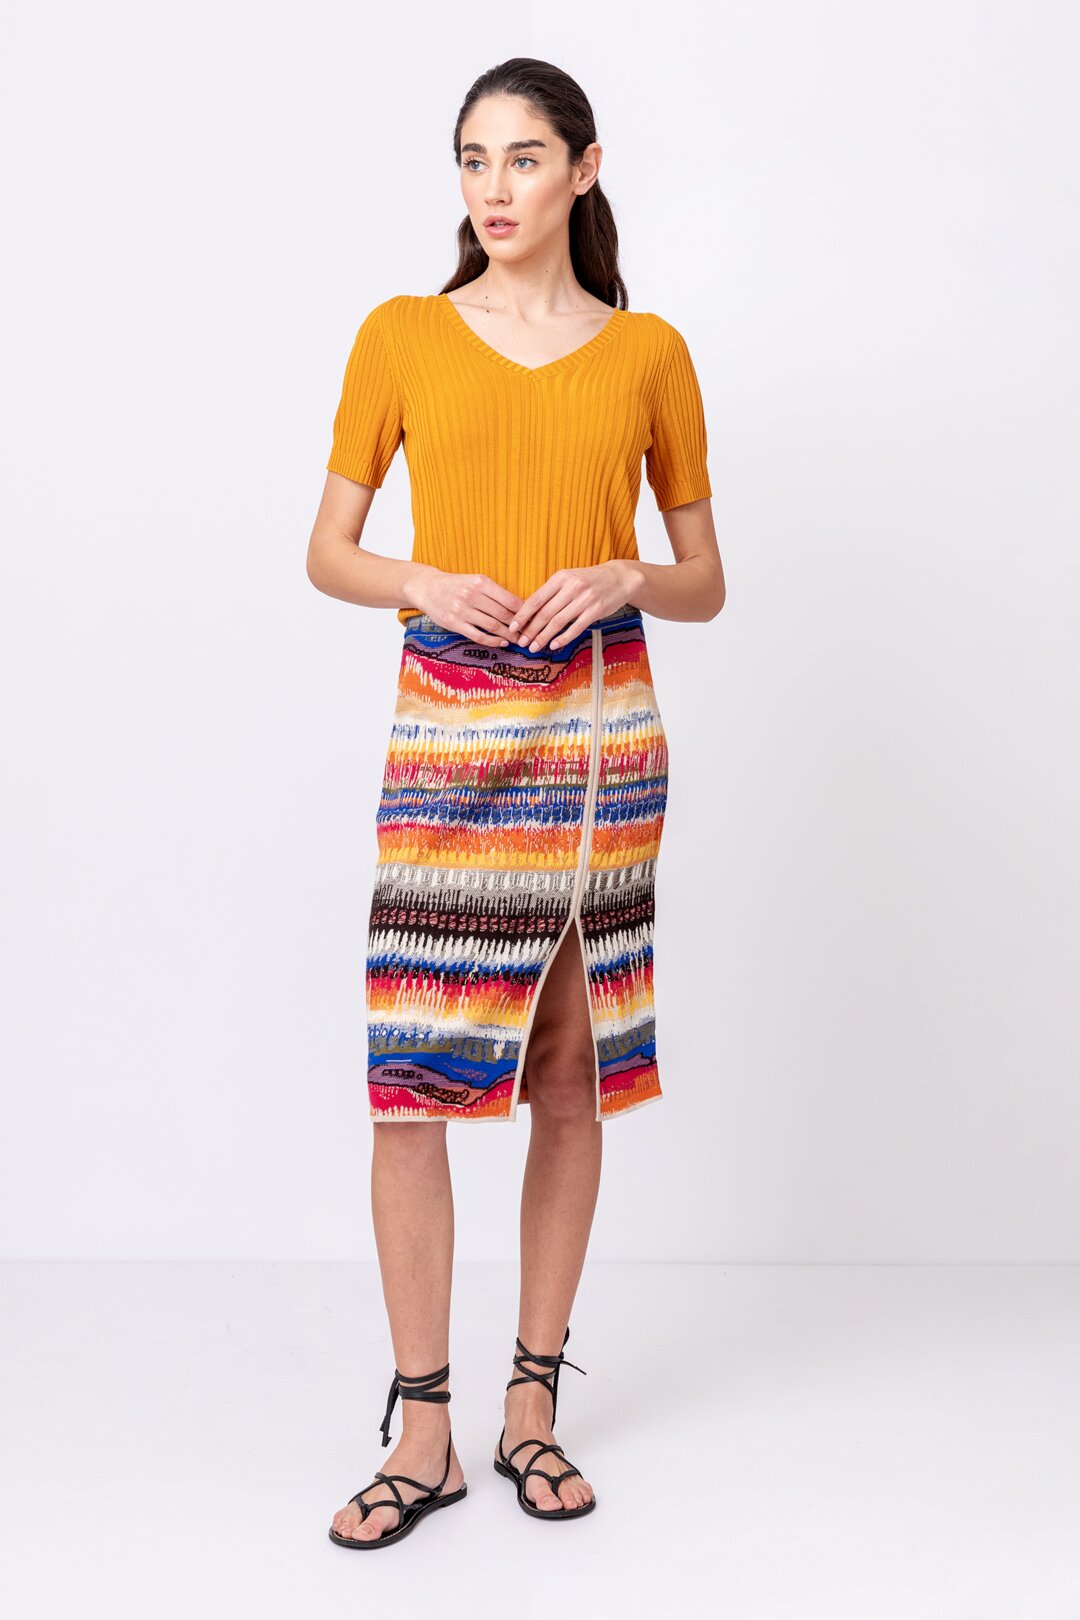 Brocade Skirt, Sunset Pattern